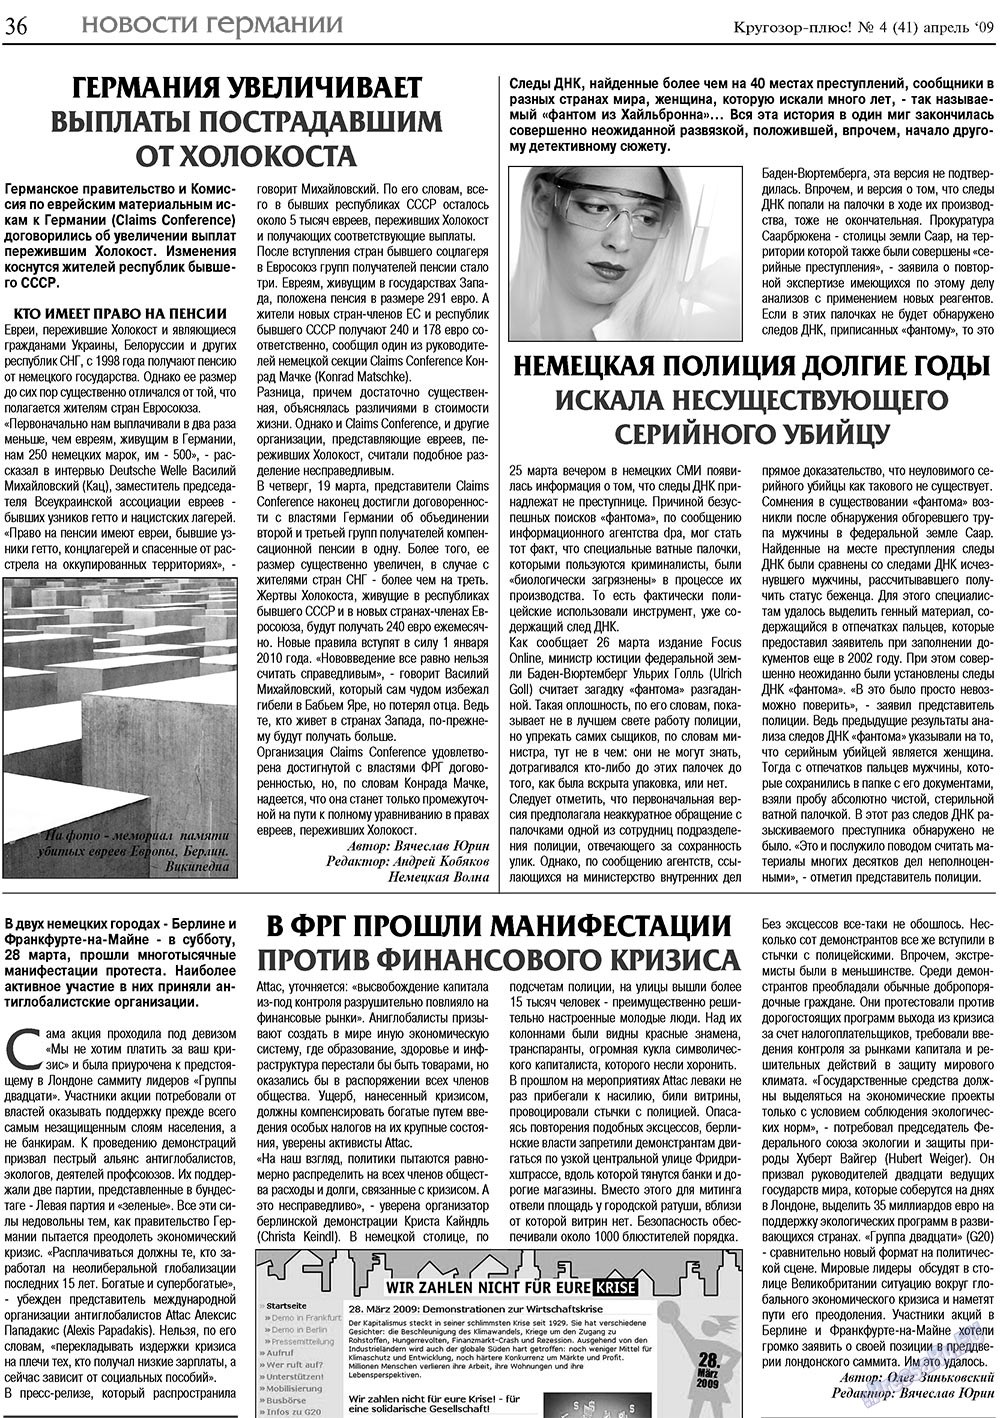 Кругозор плюс! (газета). 2009 год, номер 4, стр. 36